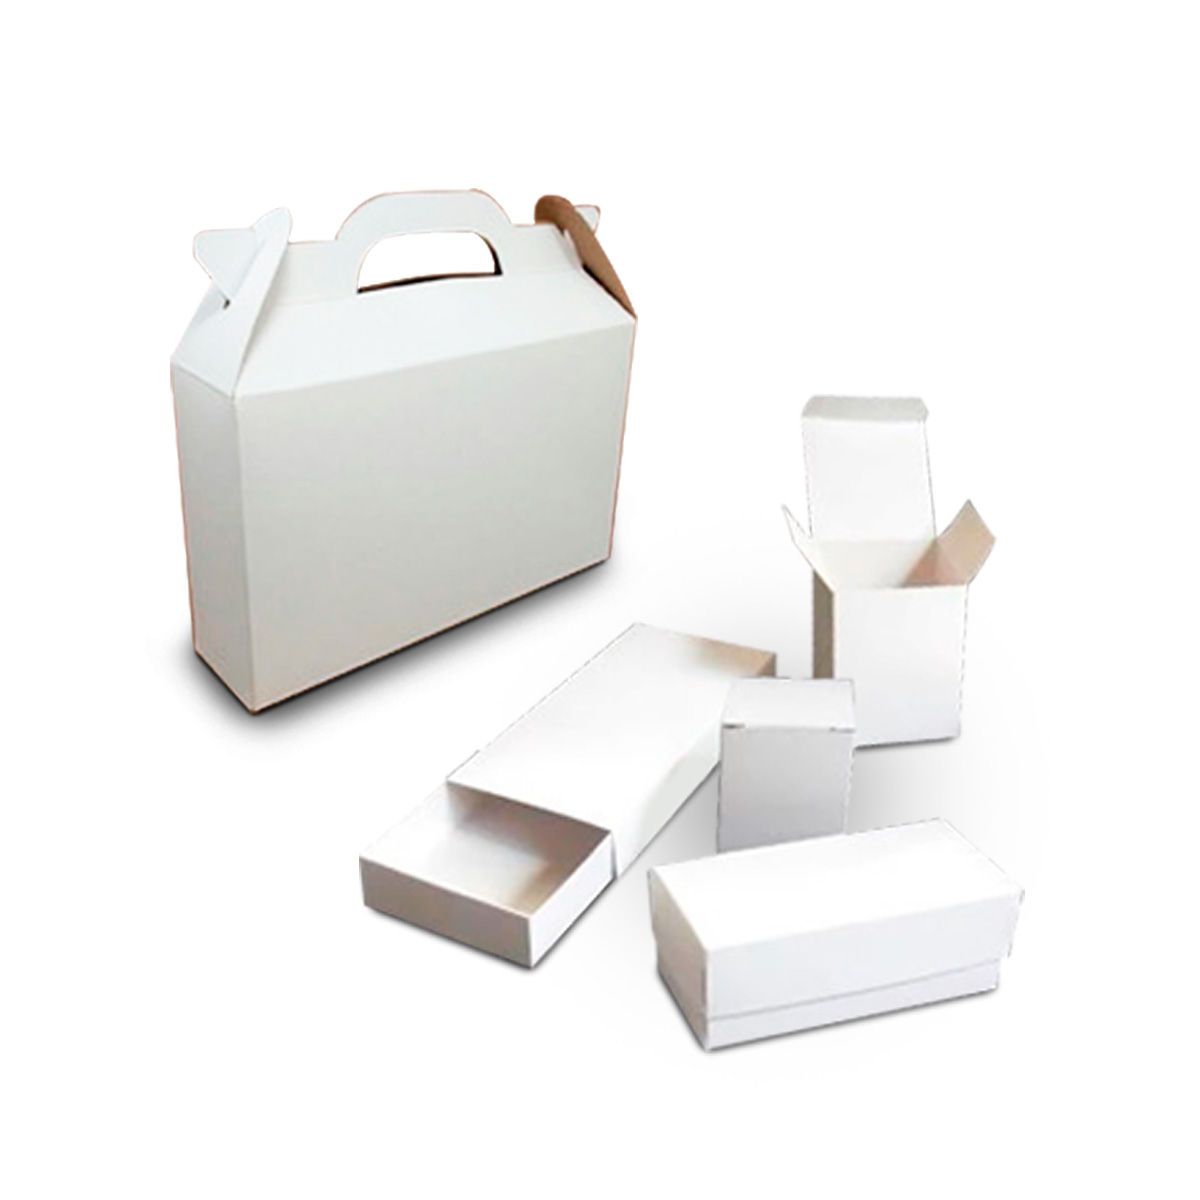 Bolsas de hielo de plástico transparente de 3 libras, 1000 bolsas por caja,  tamaño de 6 x 19 pulgadas, grosor de 1.25 milésimas de pulgada